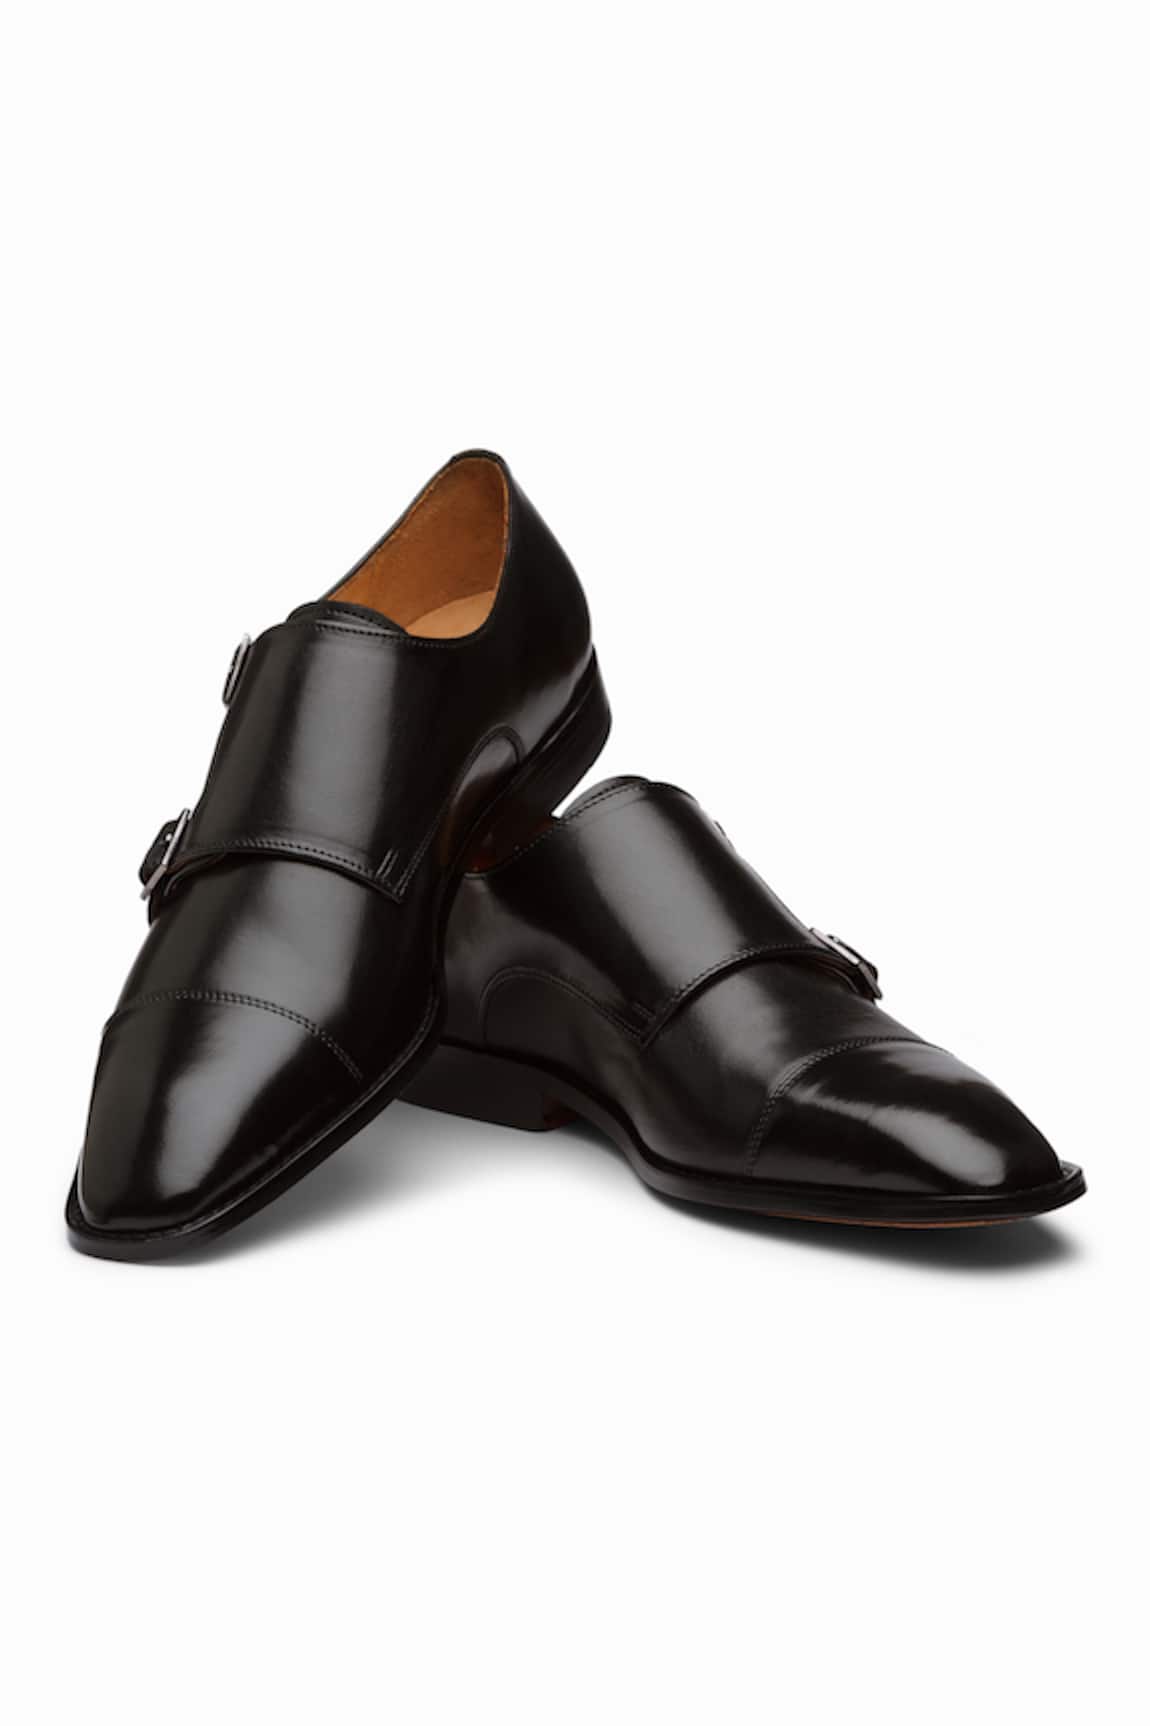 3DM LIFESTYLE Leather Double Monk Strap Shoes